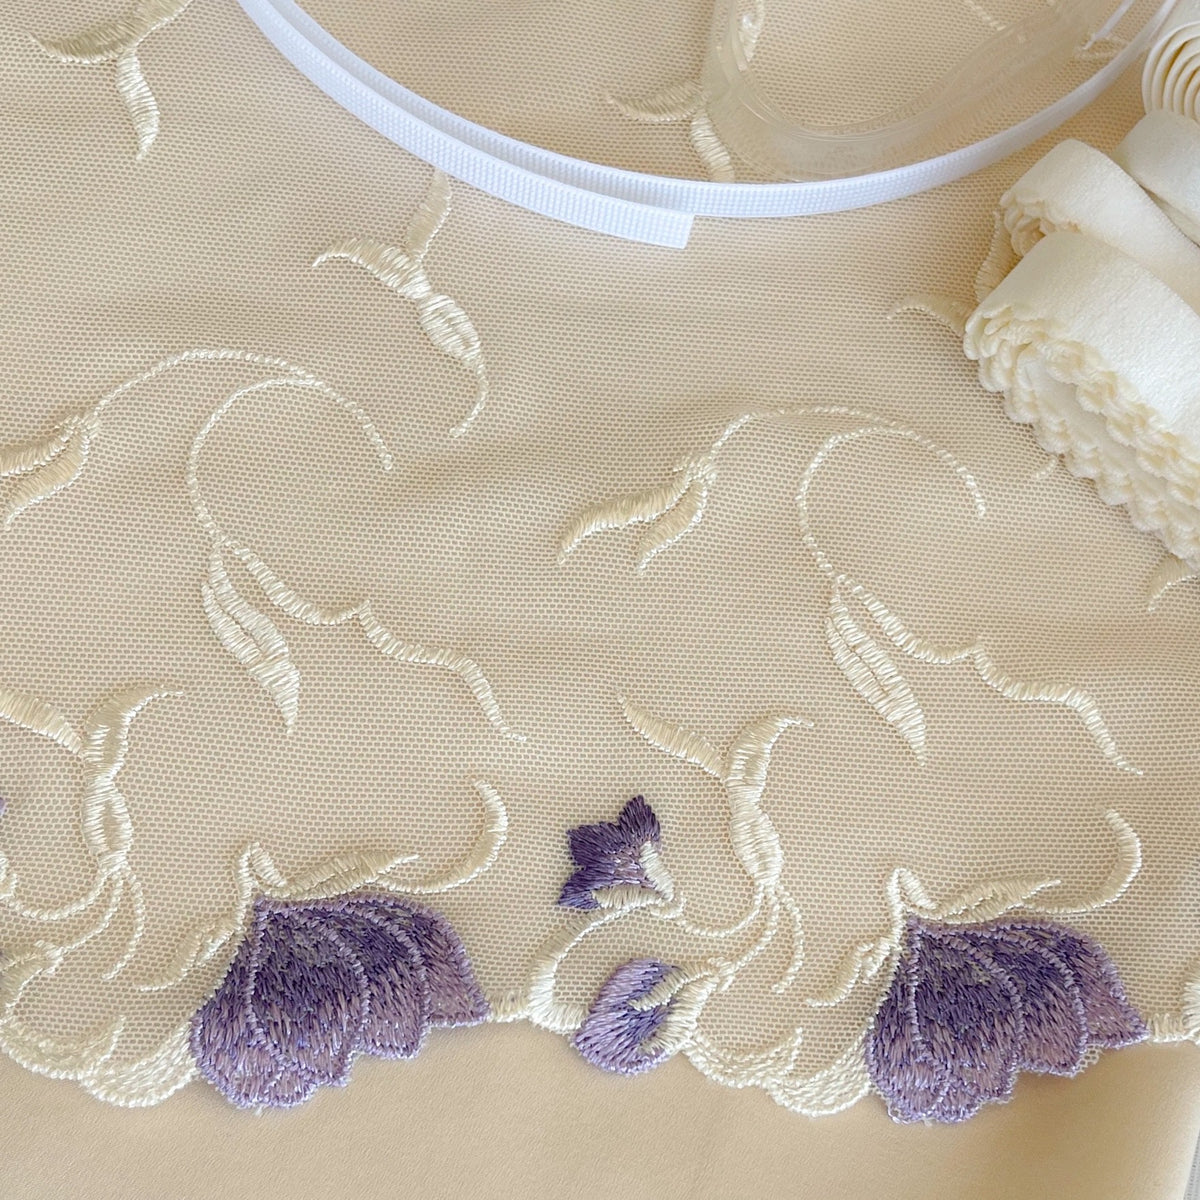 Sugared Violets Stretch Lace Bra Kit – Bra Builders